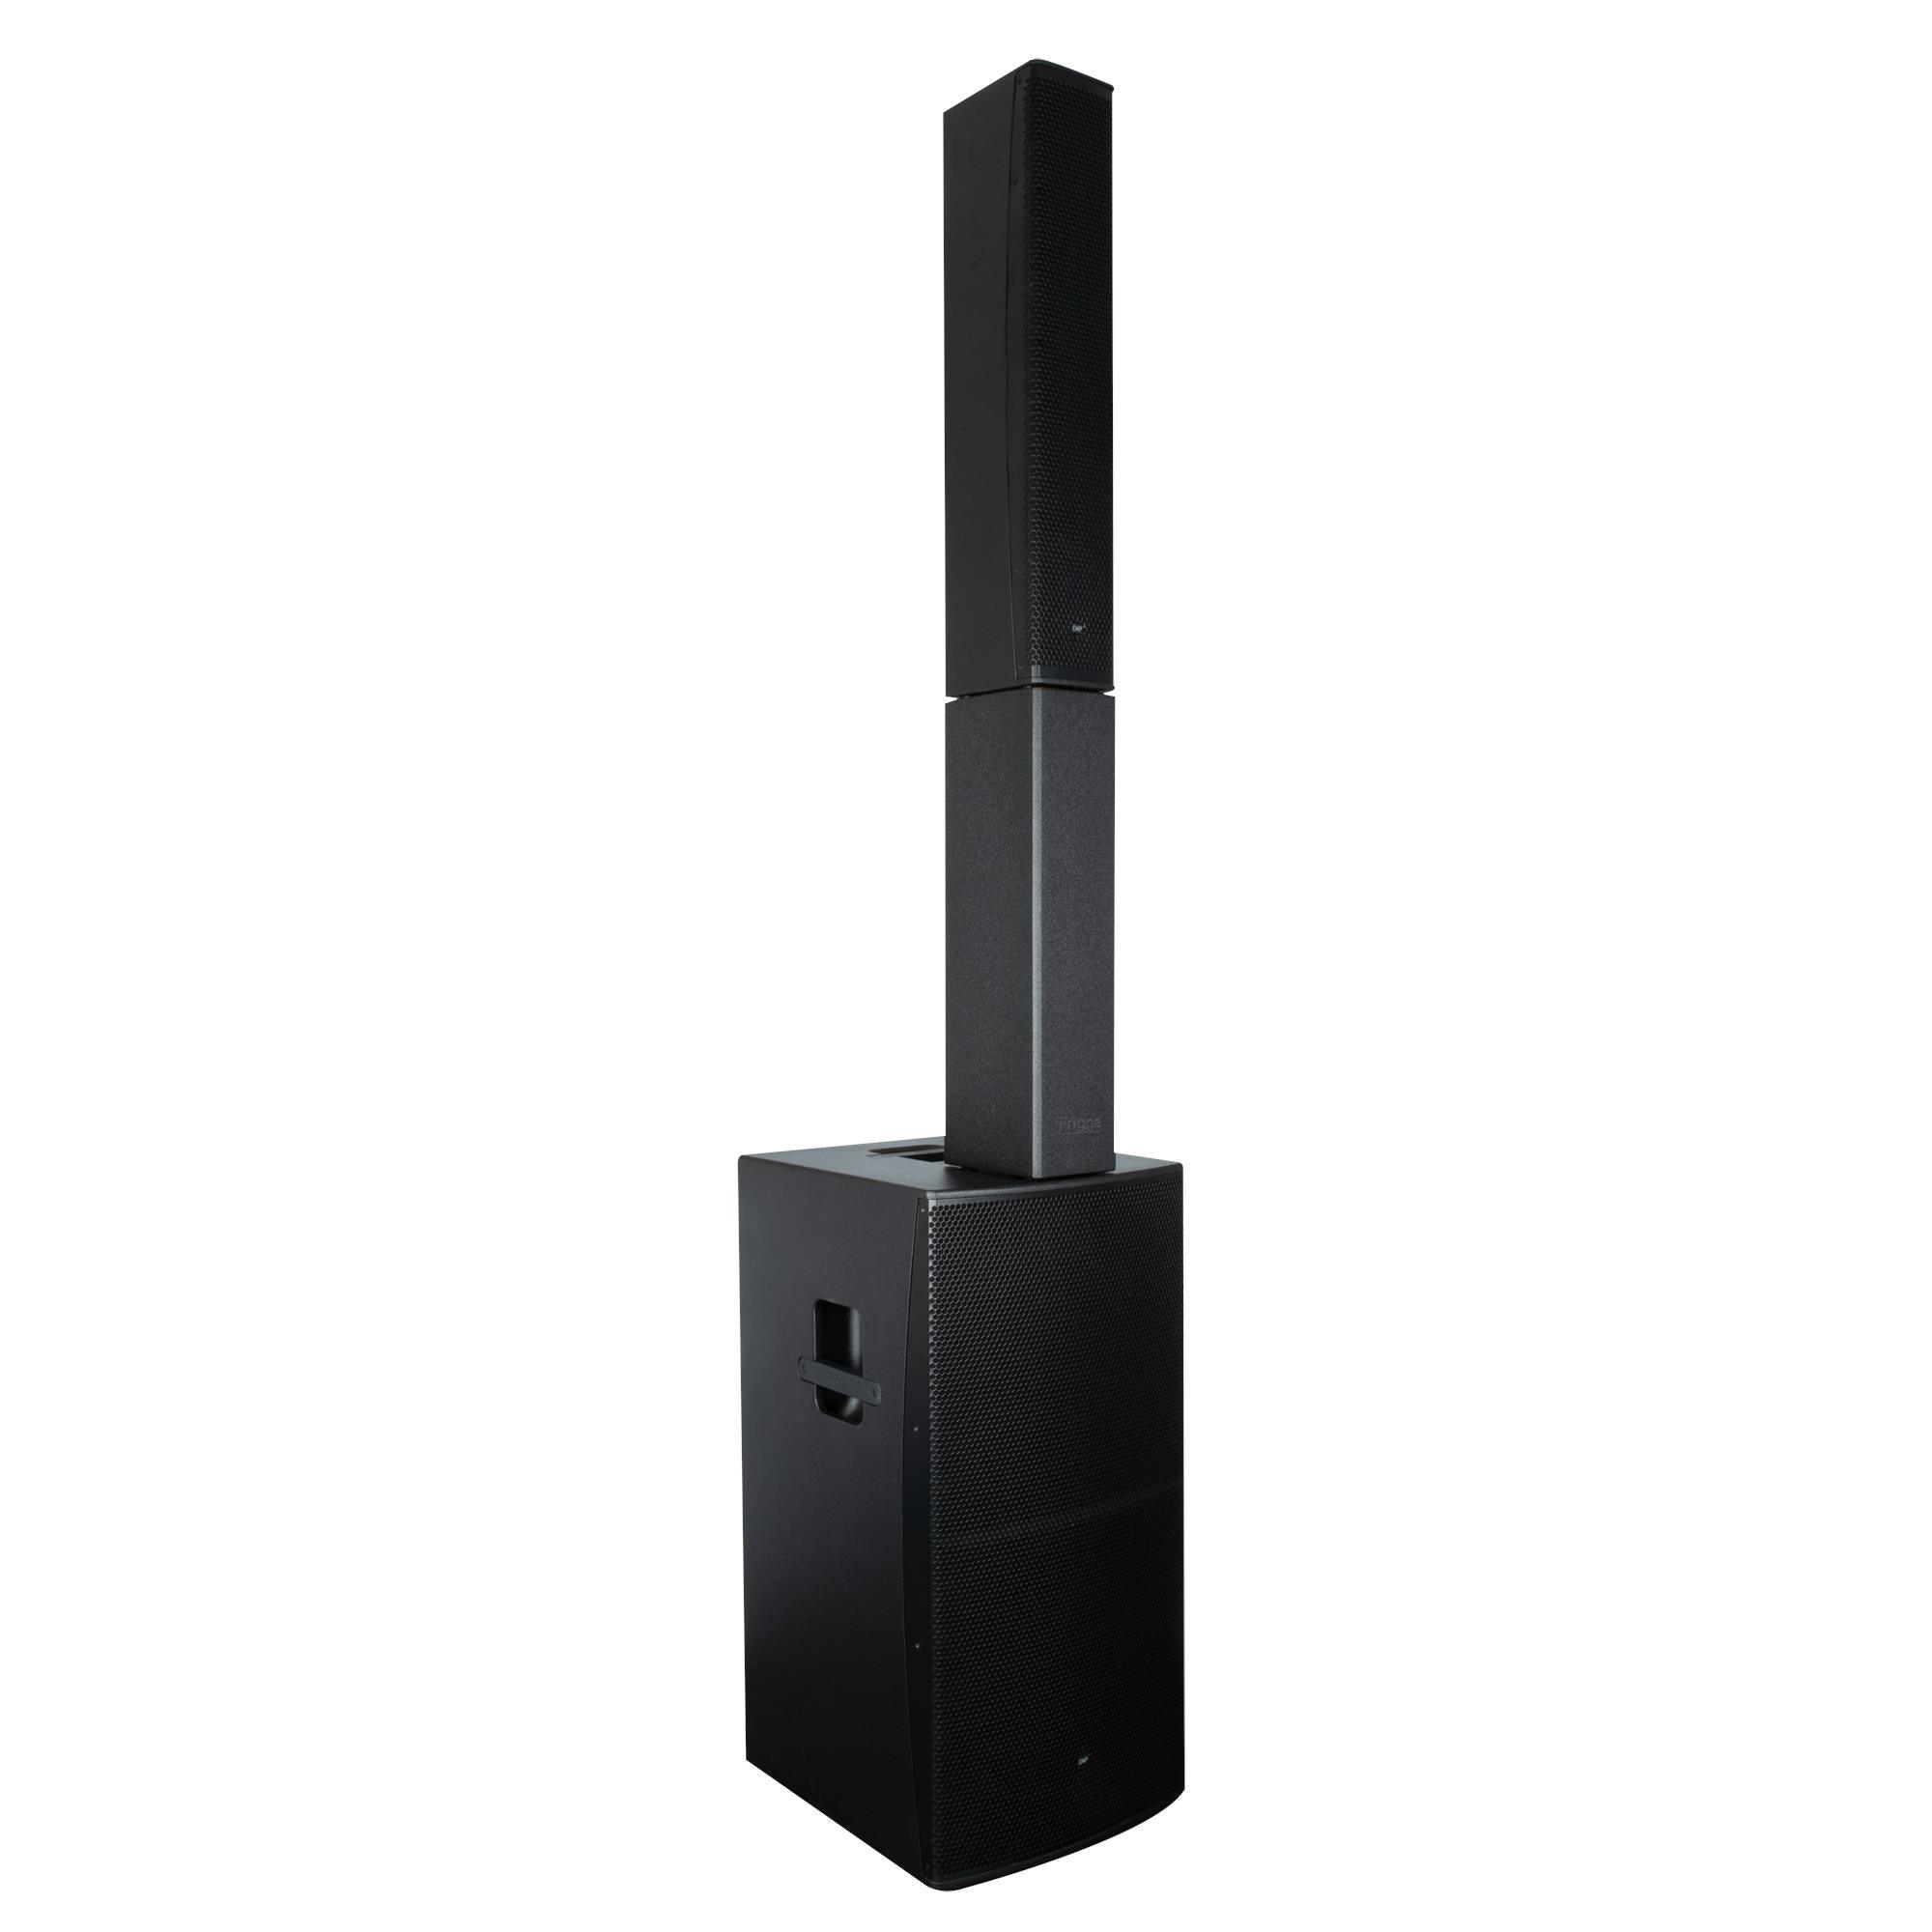 DAP Frigga 12" Black Active Column PA System - DY Pro Audio